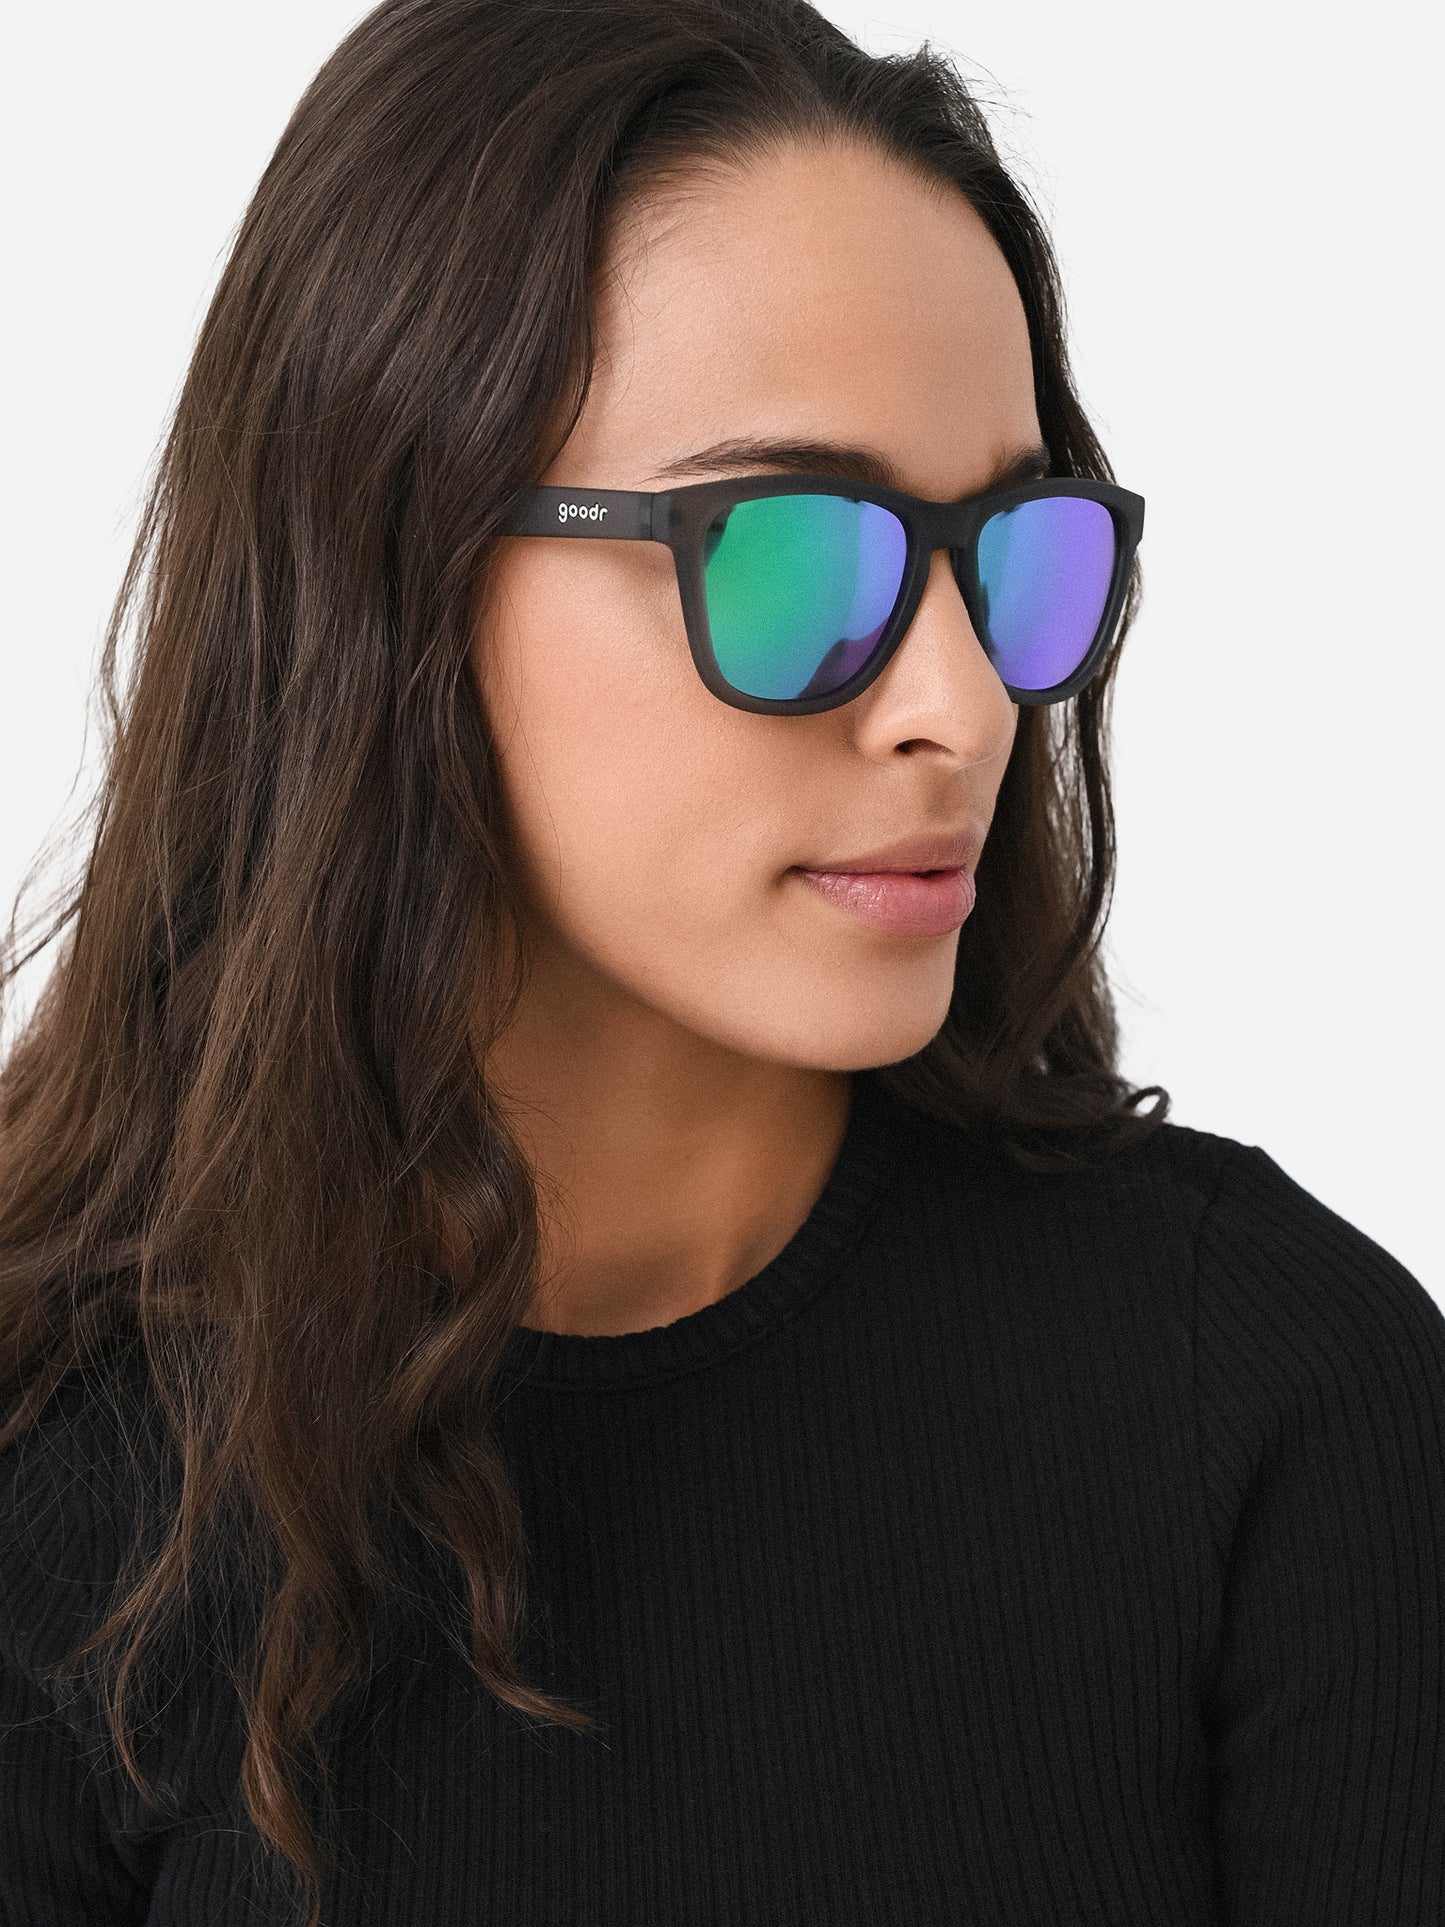 Goodr Silverback Squat Mobility Sunglasses